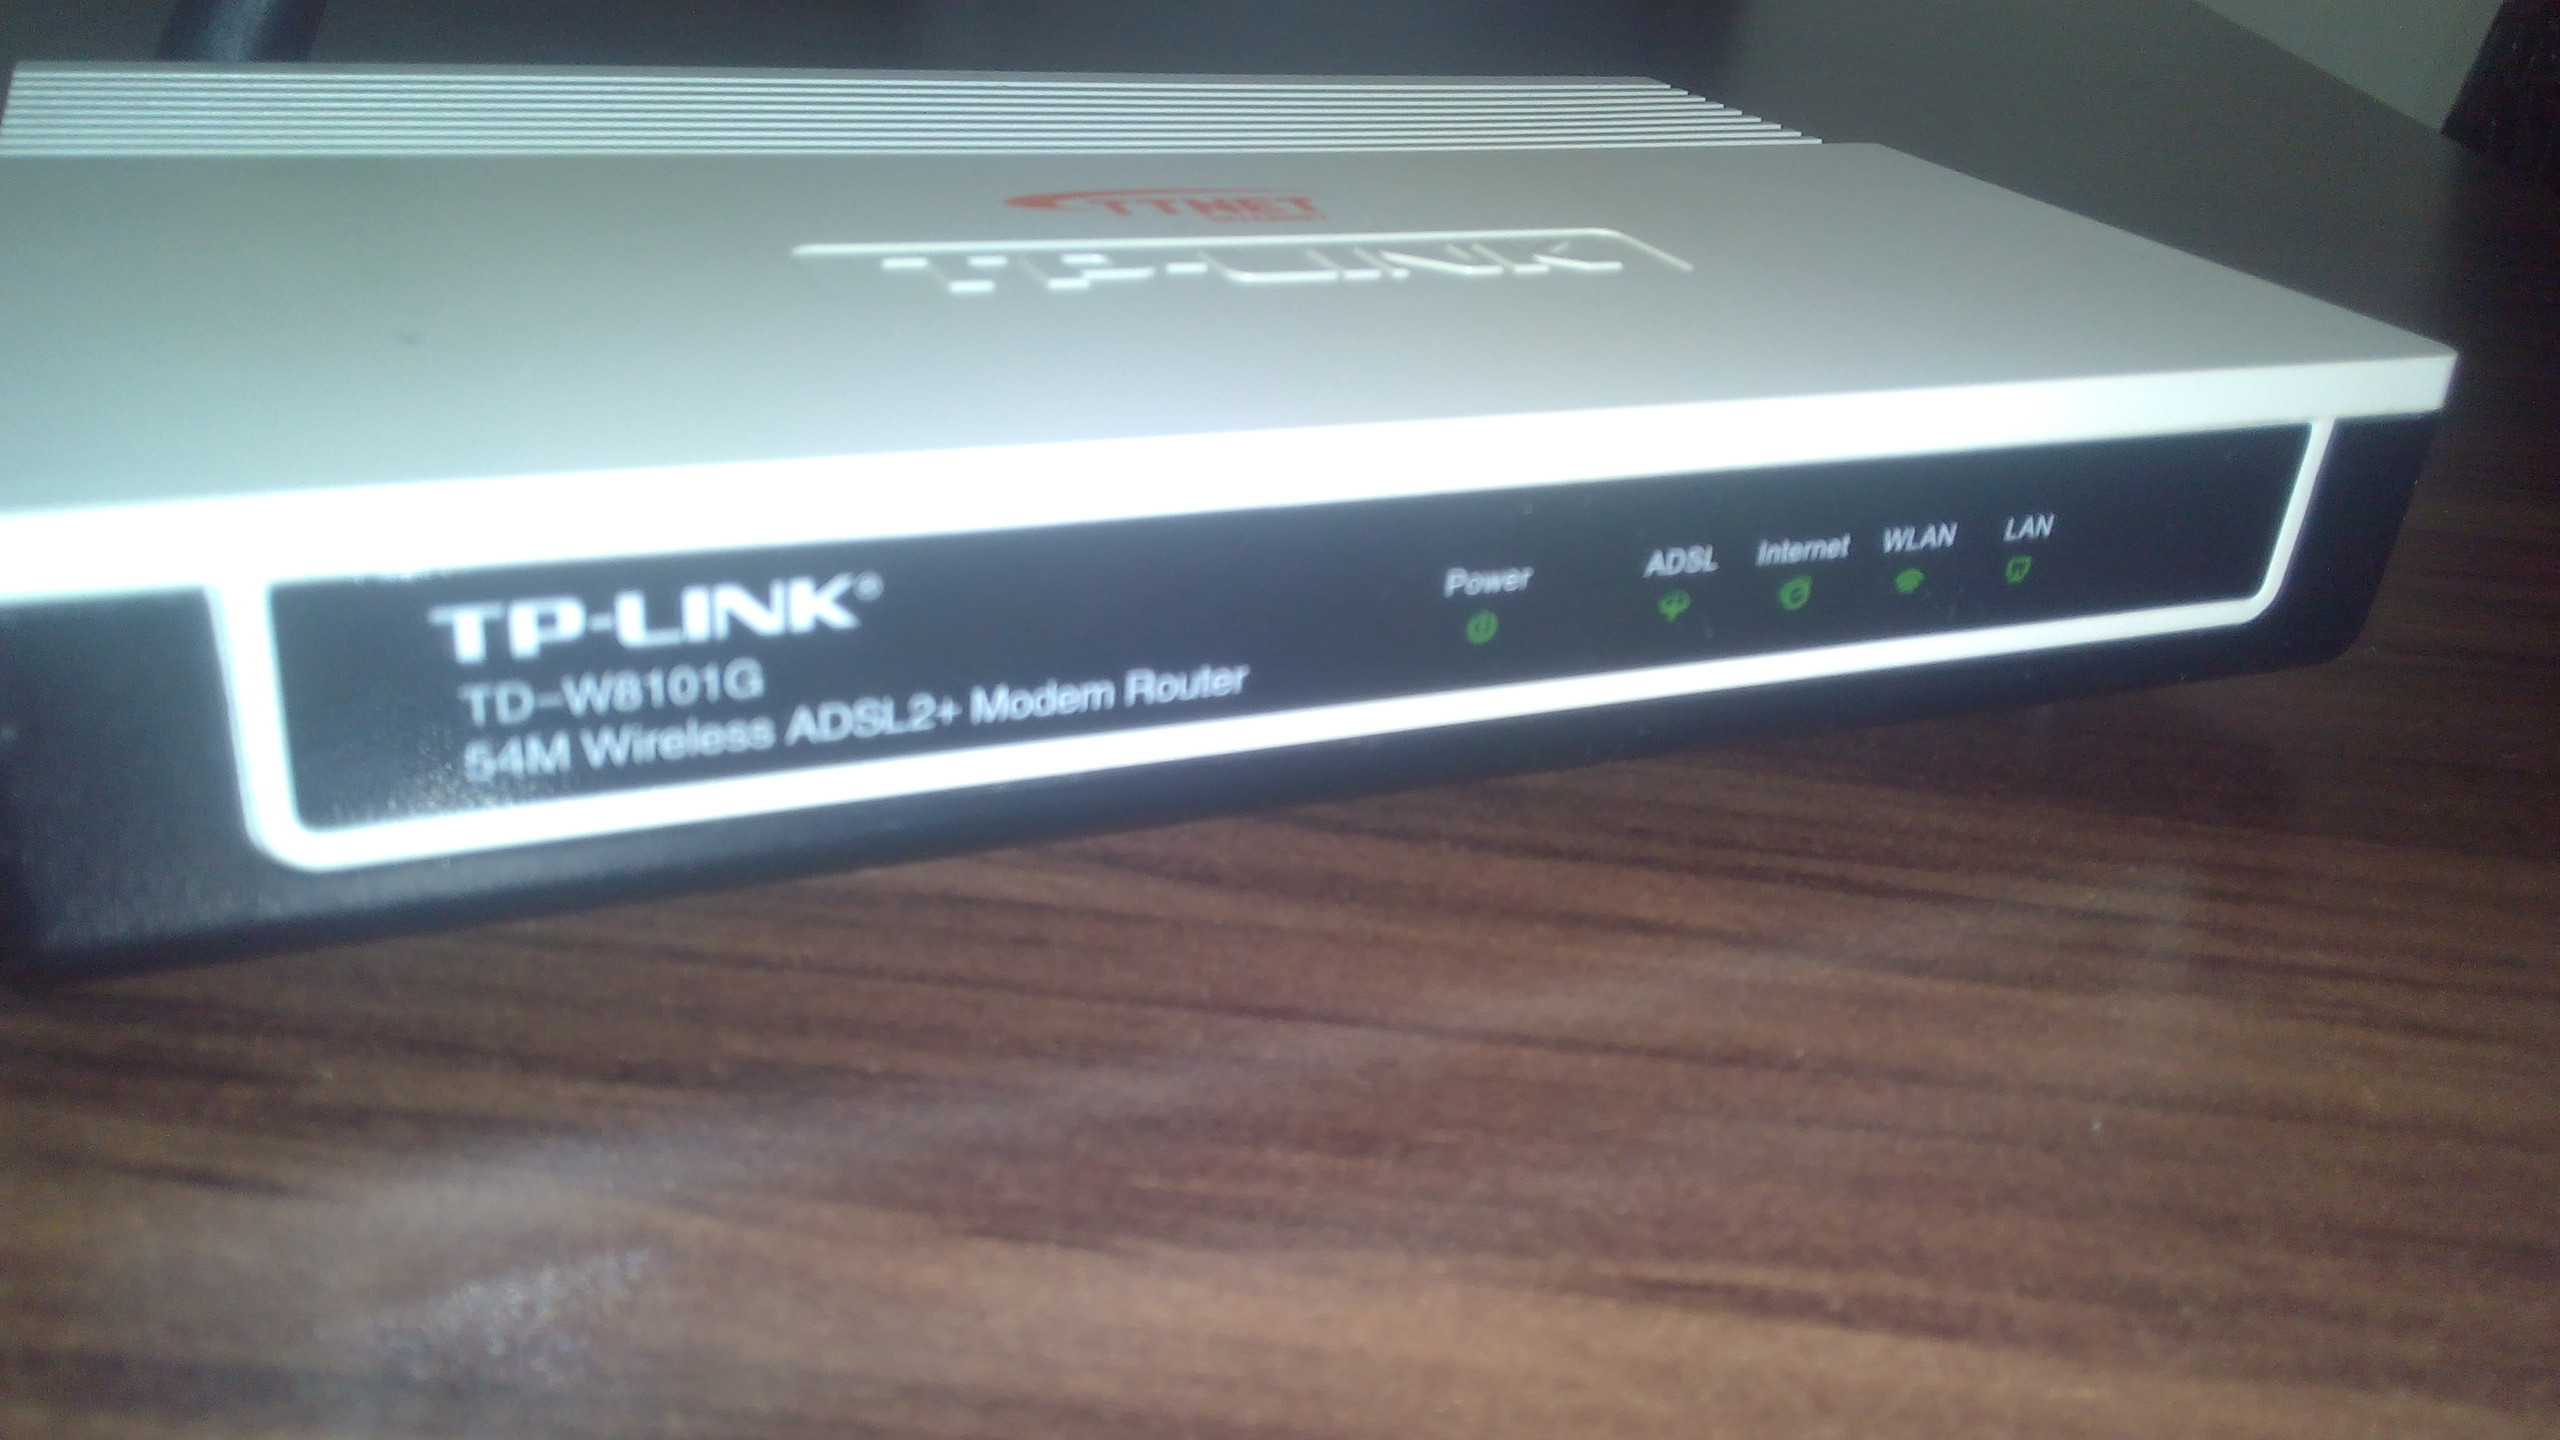  Asus RT-N10 Router+Ttnet modem+Switch